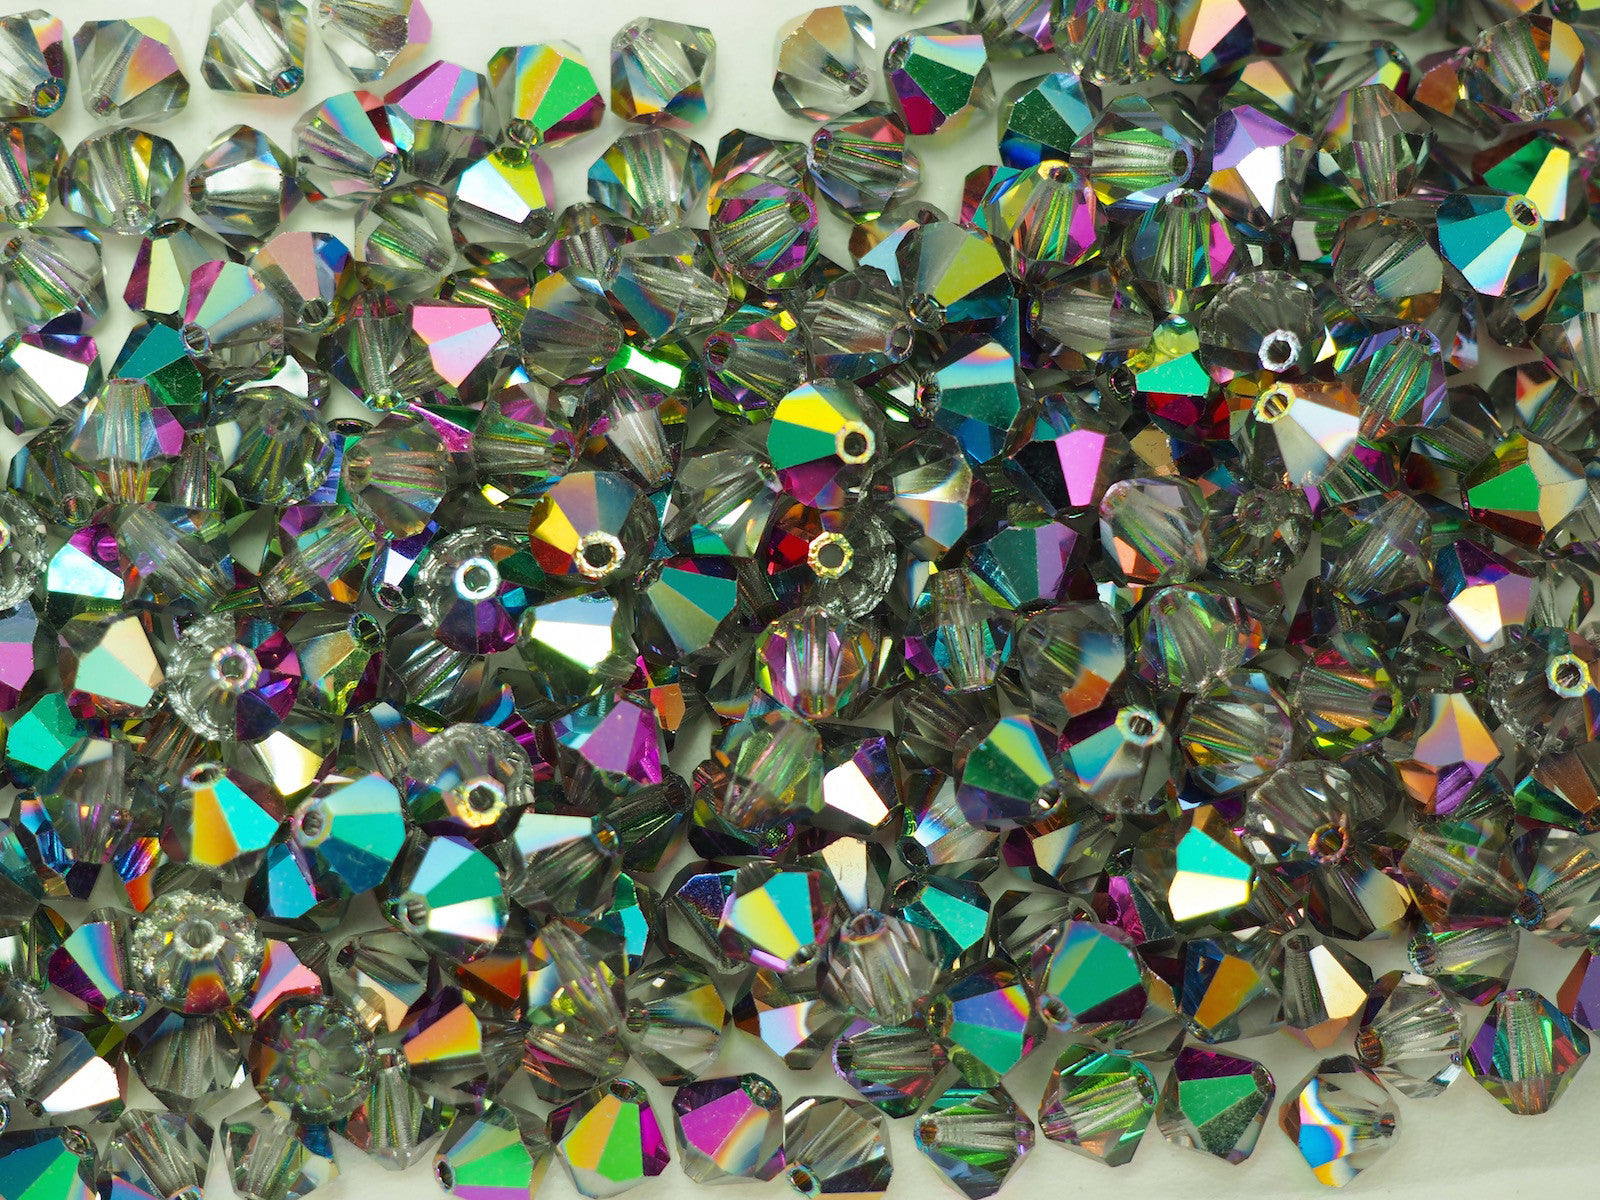 Crystal Vitrail Green, Czech Glass Beads, Machine Cut Bicones (MC Rondell, Diamond Shape), clear crystal coated with vitrail green metallic